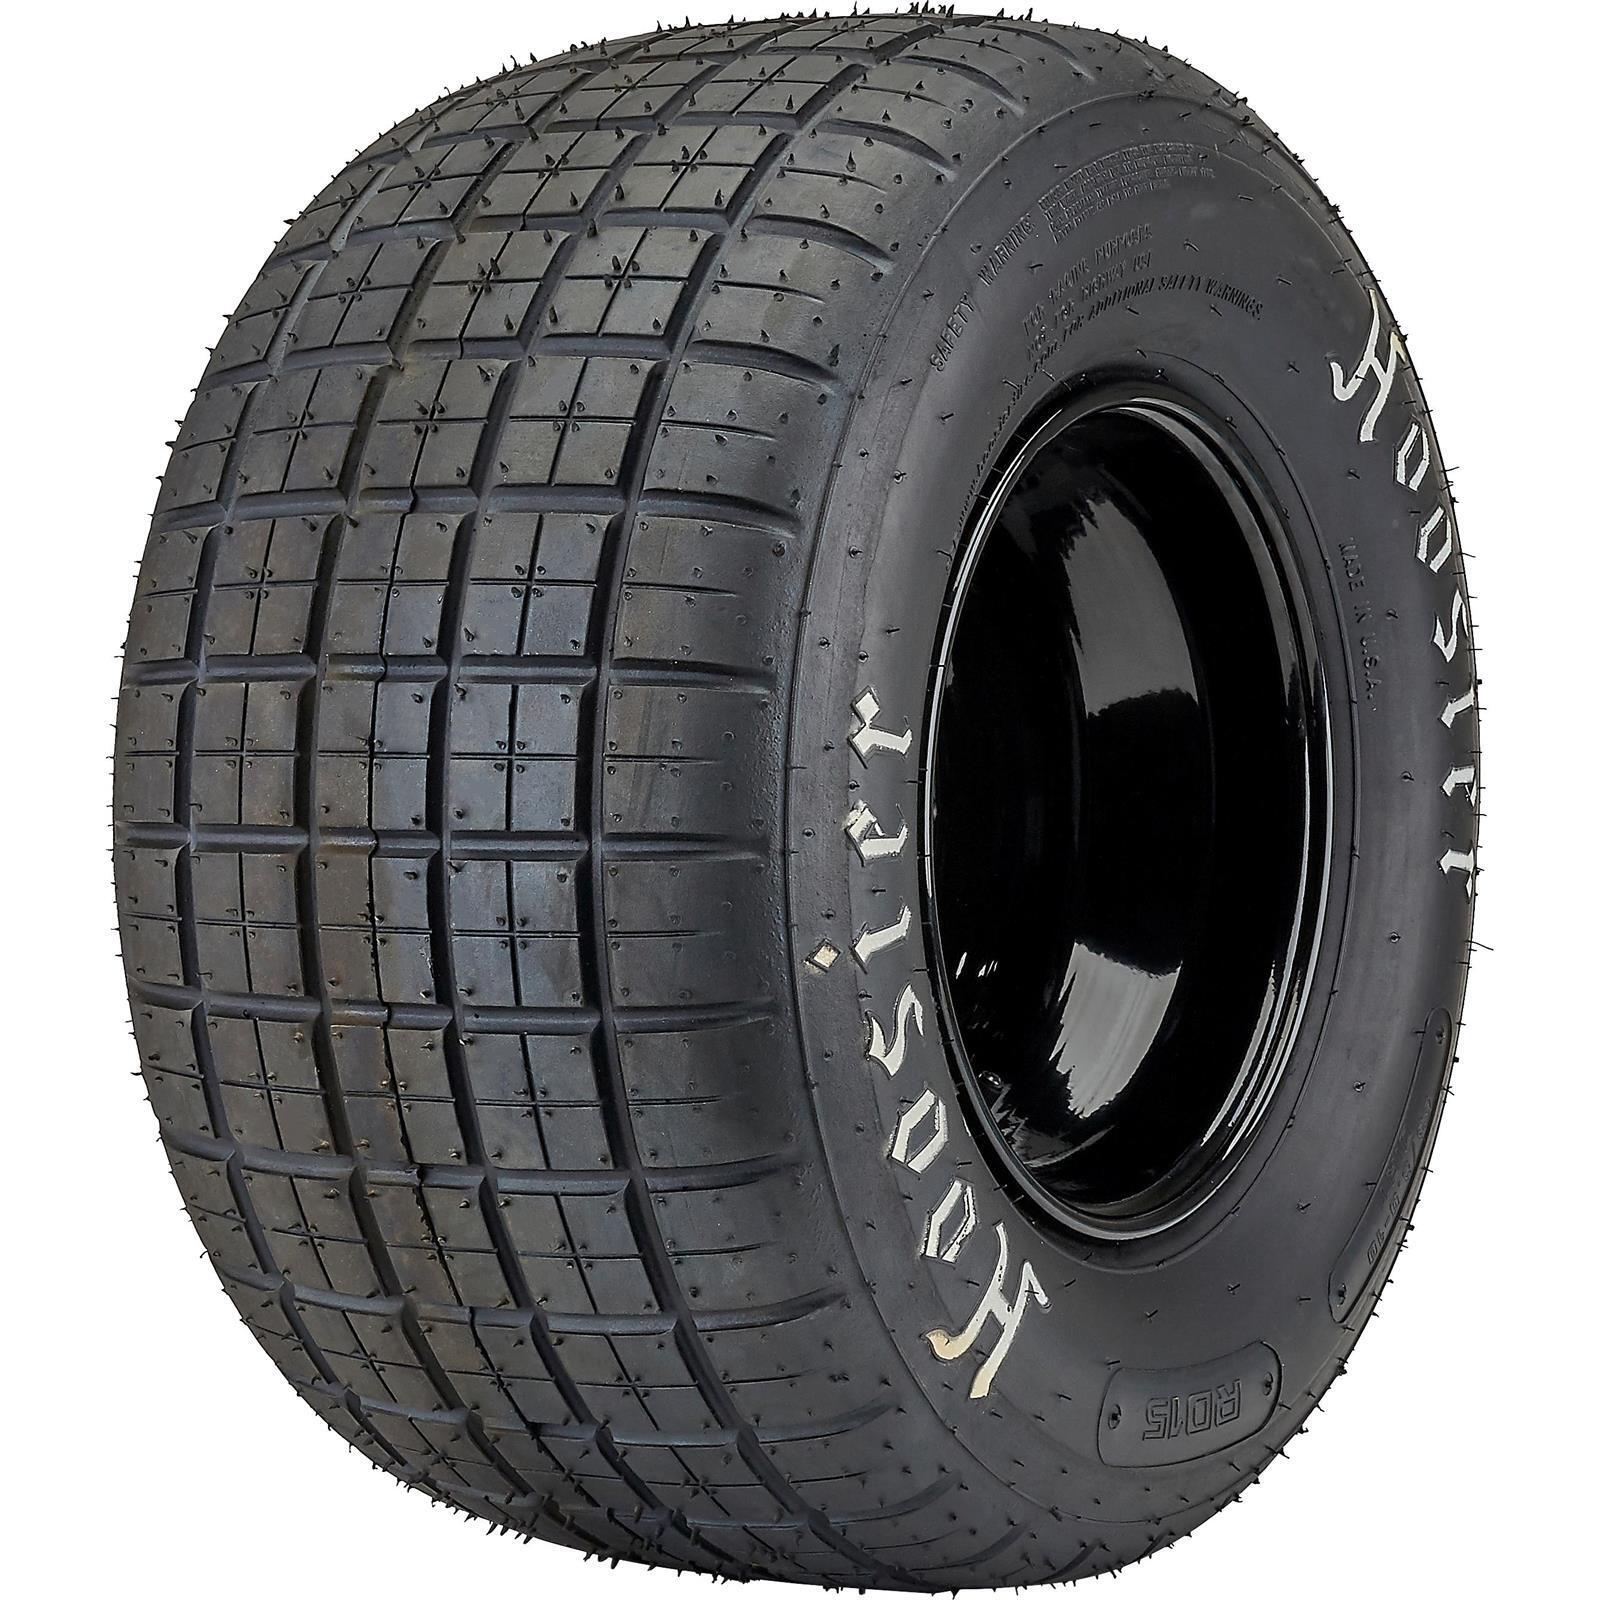 Hoosier 42183-RD20 Midget/Micro/Jr Sprint Tire, 63.0/10.0-10 RD20